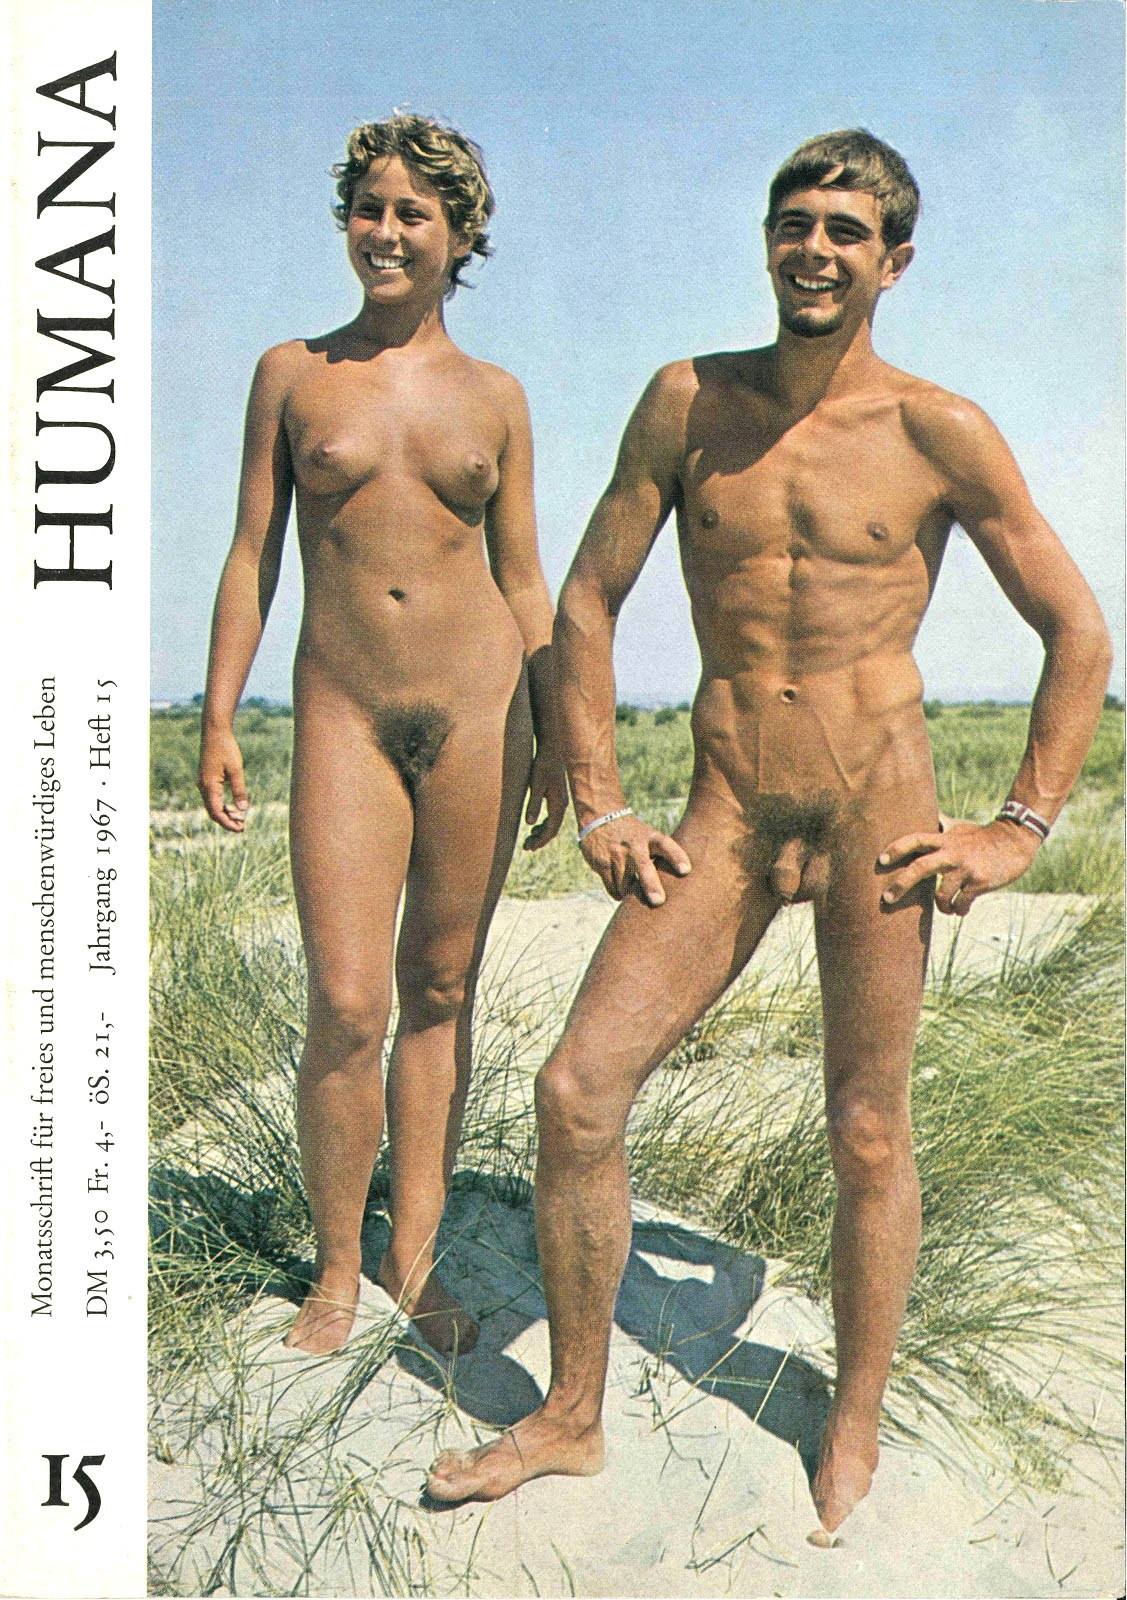 Nudist Magazine Cover 1967